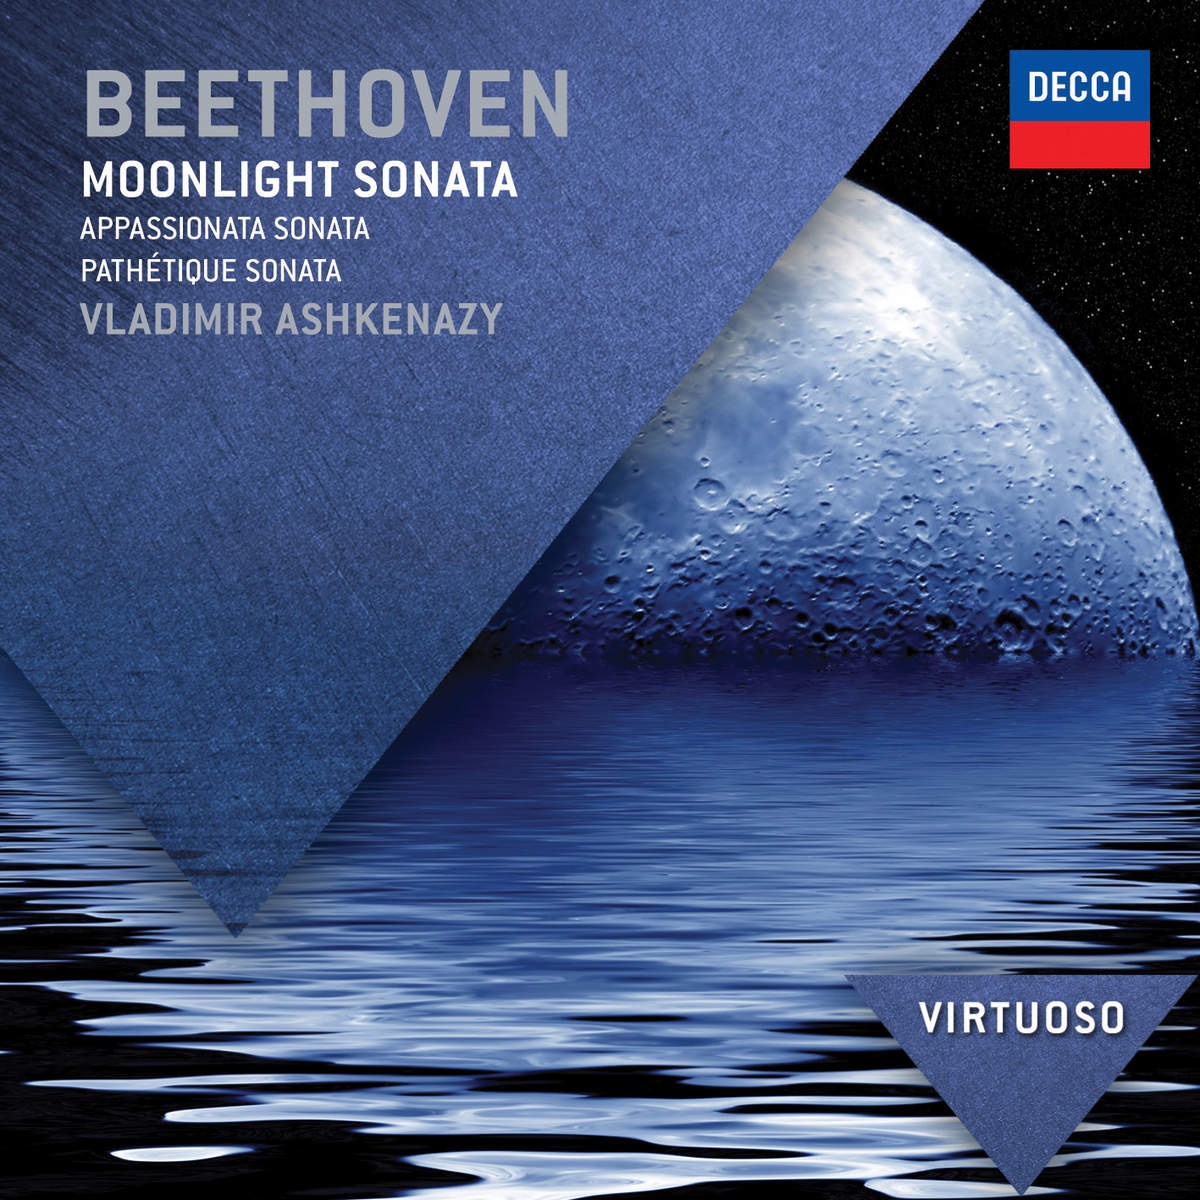 Beethoven: Moonlight Sonata, Appassionata Sonata  Pathe tique Sonata